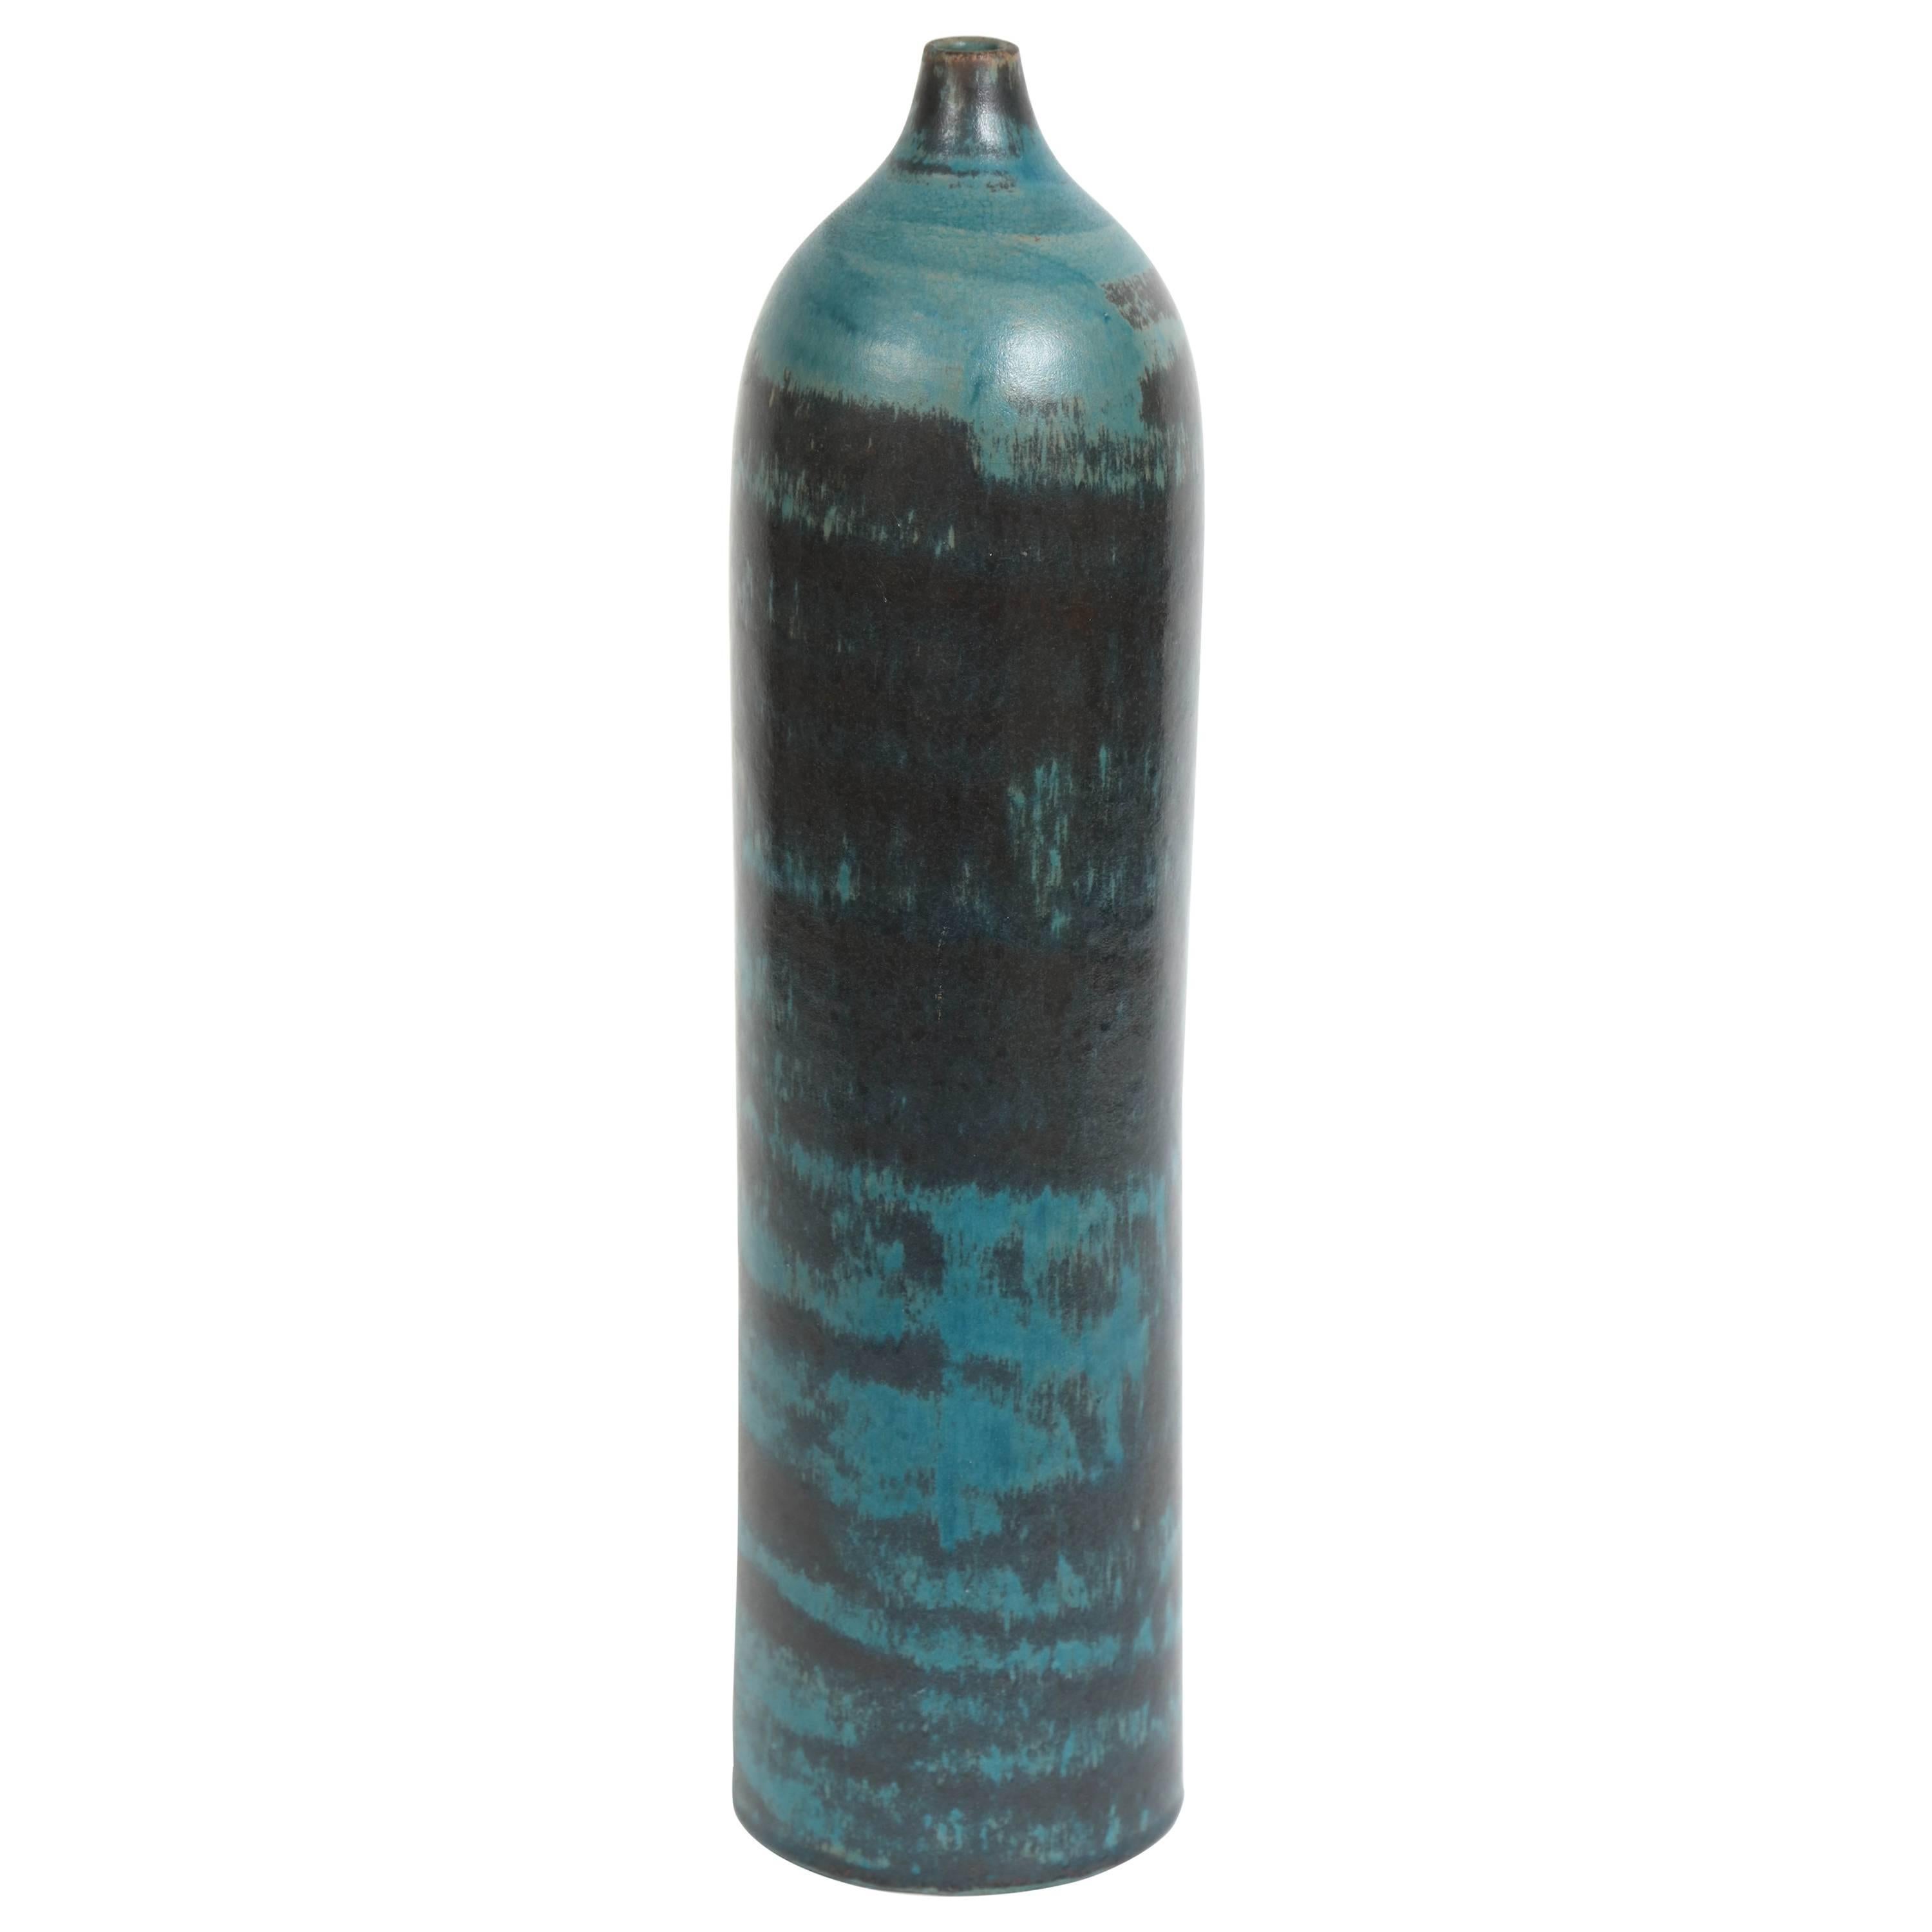 Marcello Fantoni Cylindrical Ceramic Bottle Vase, Glazed Stoneware, circa 1960s For Sale